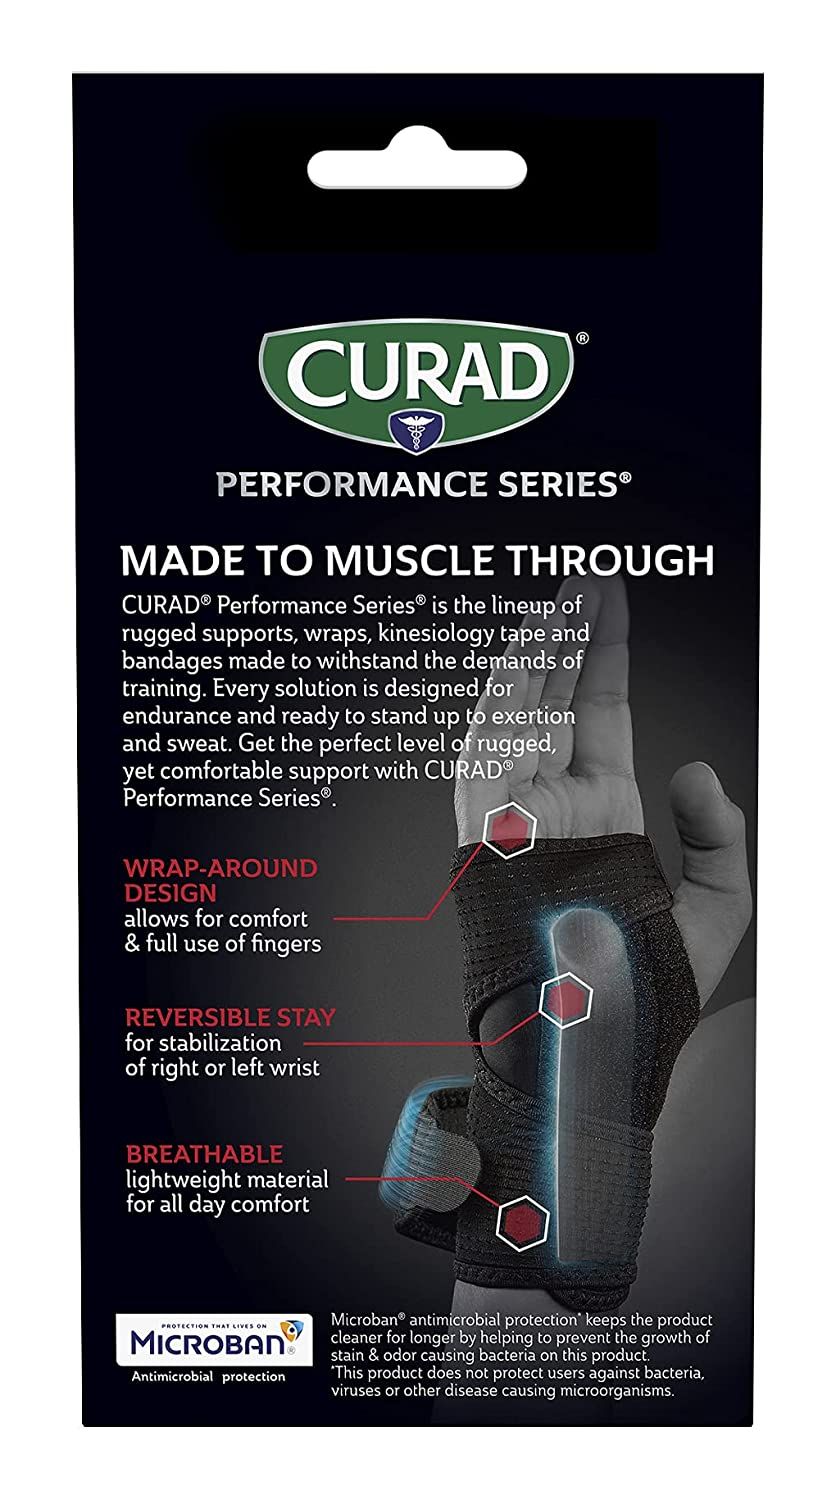 DISCCurad Performance Series Ironman Reversible Wrist Support, Black - Universal